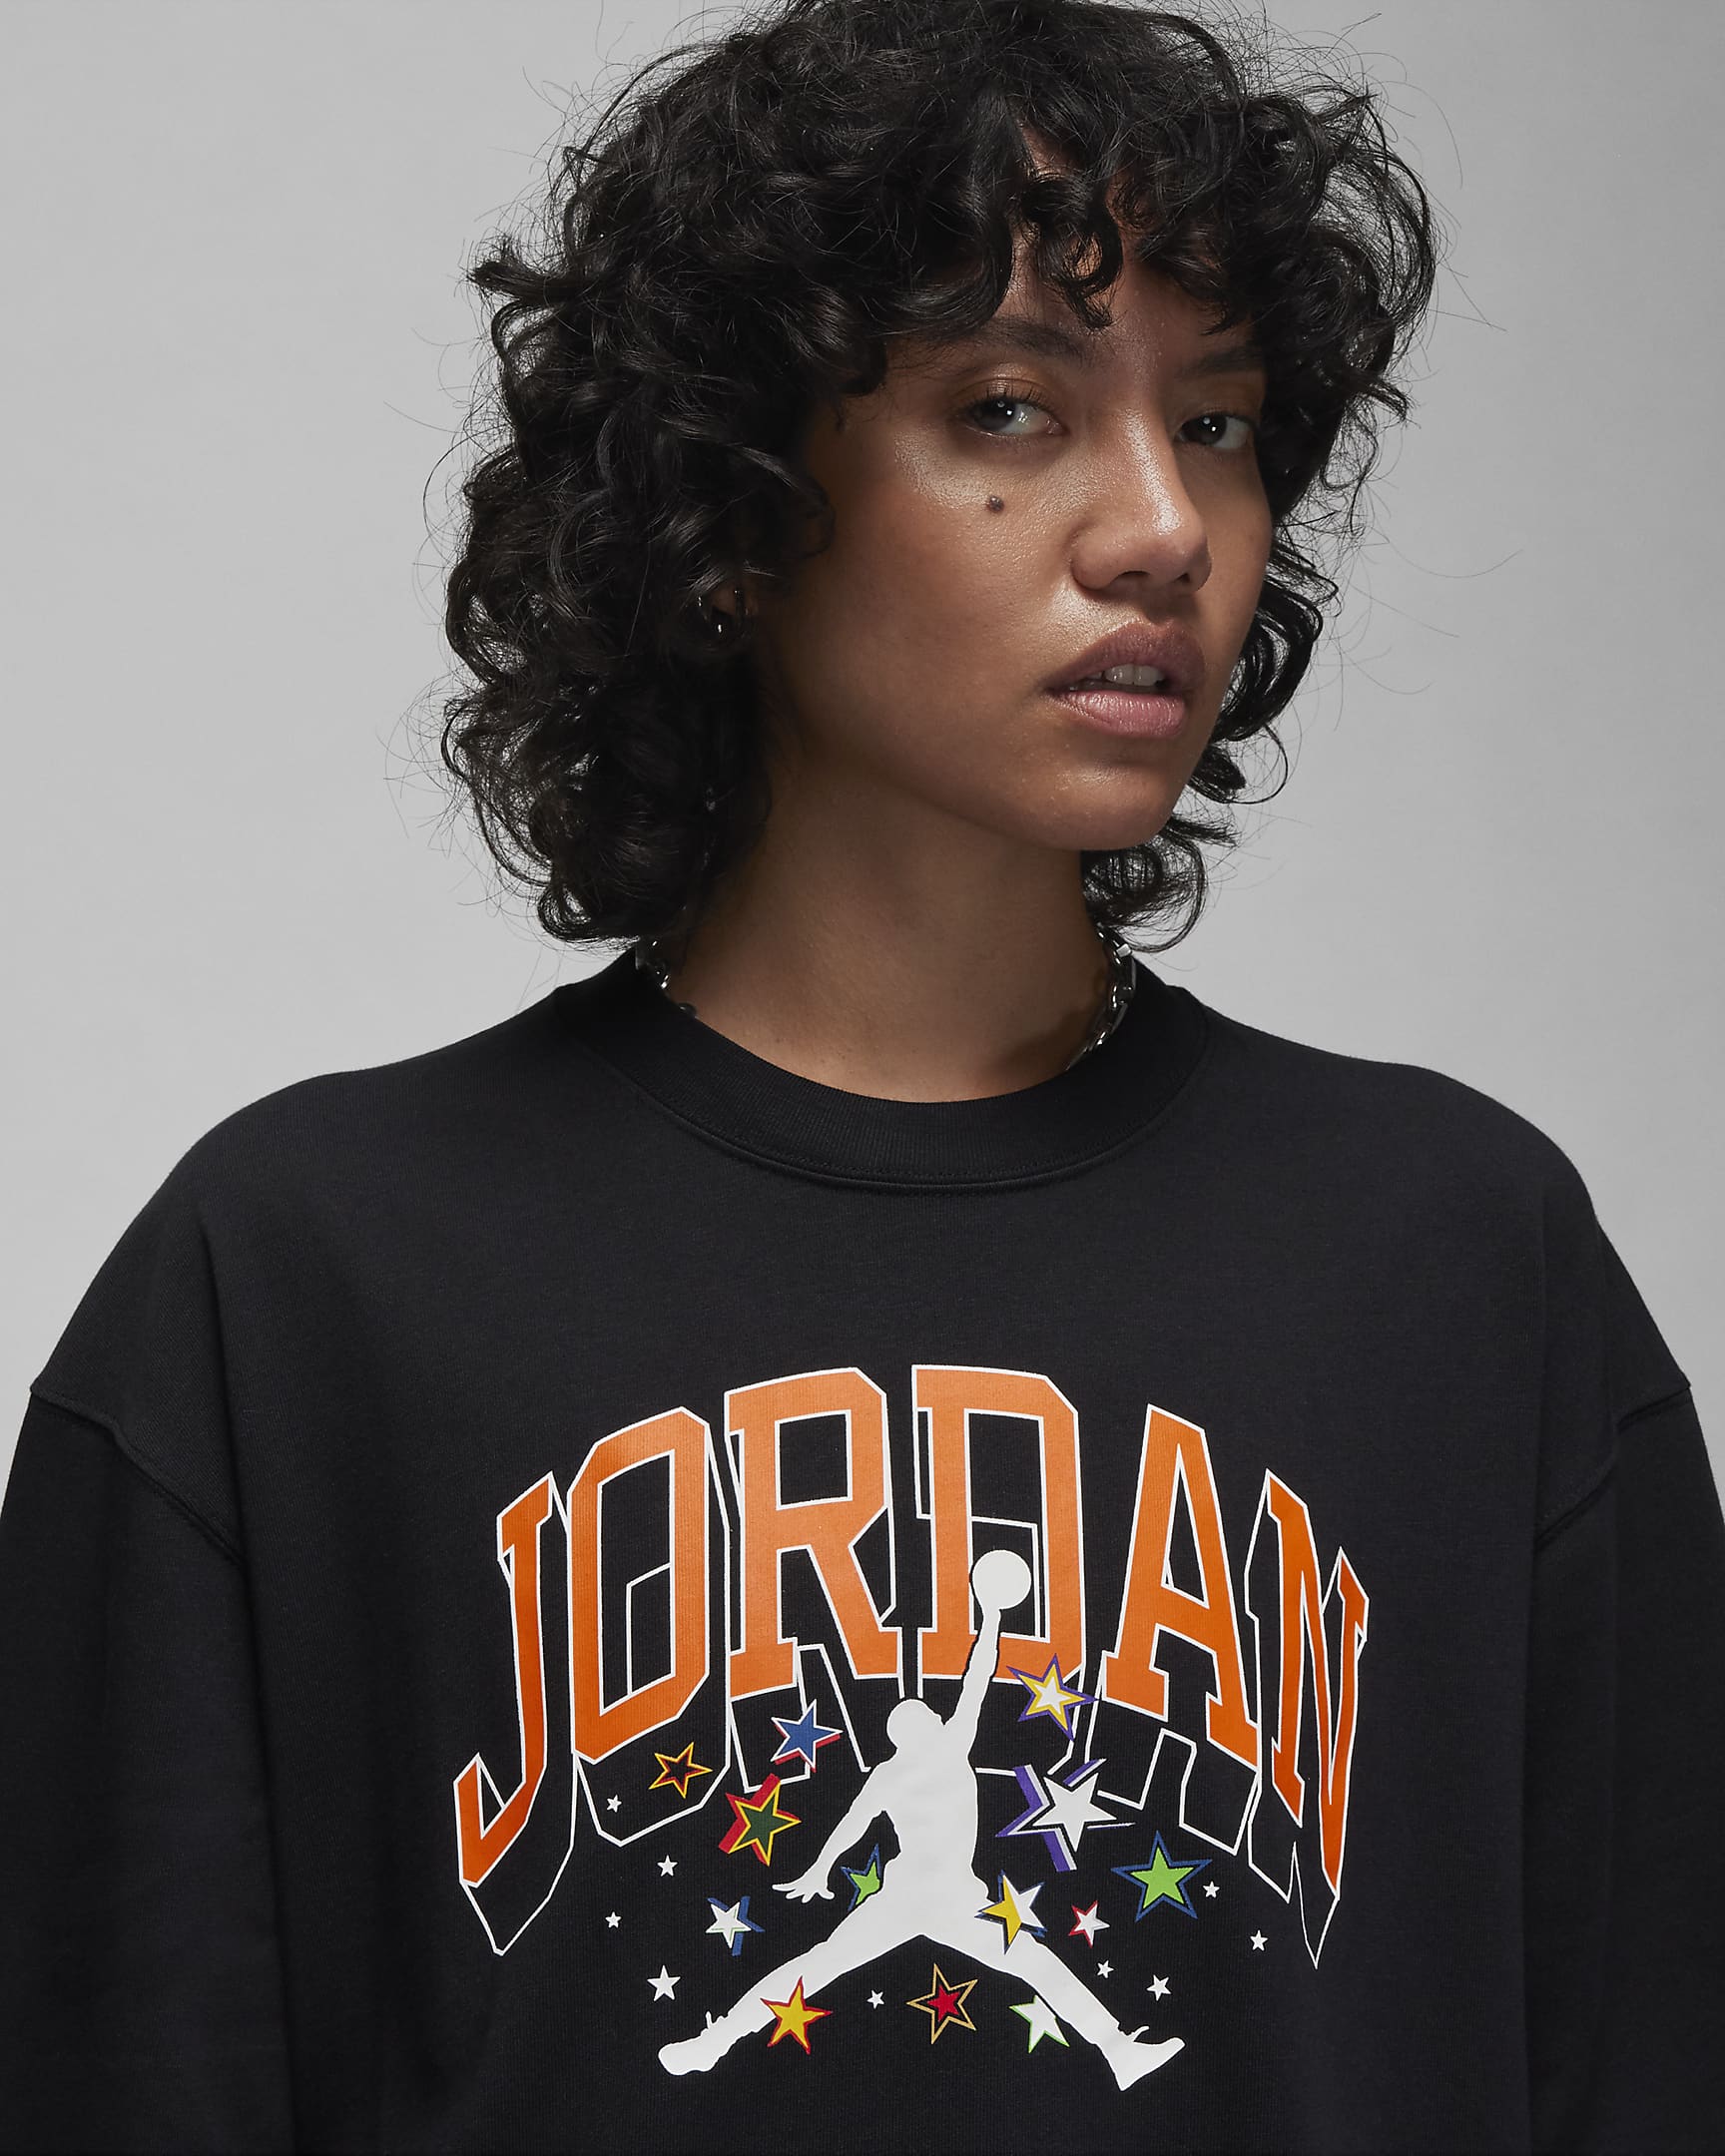 Jordan Women's T-Shirt. Nike.com